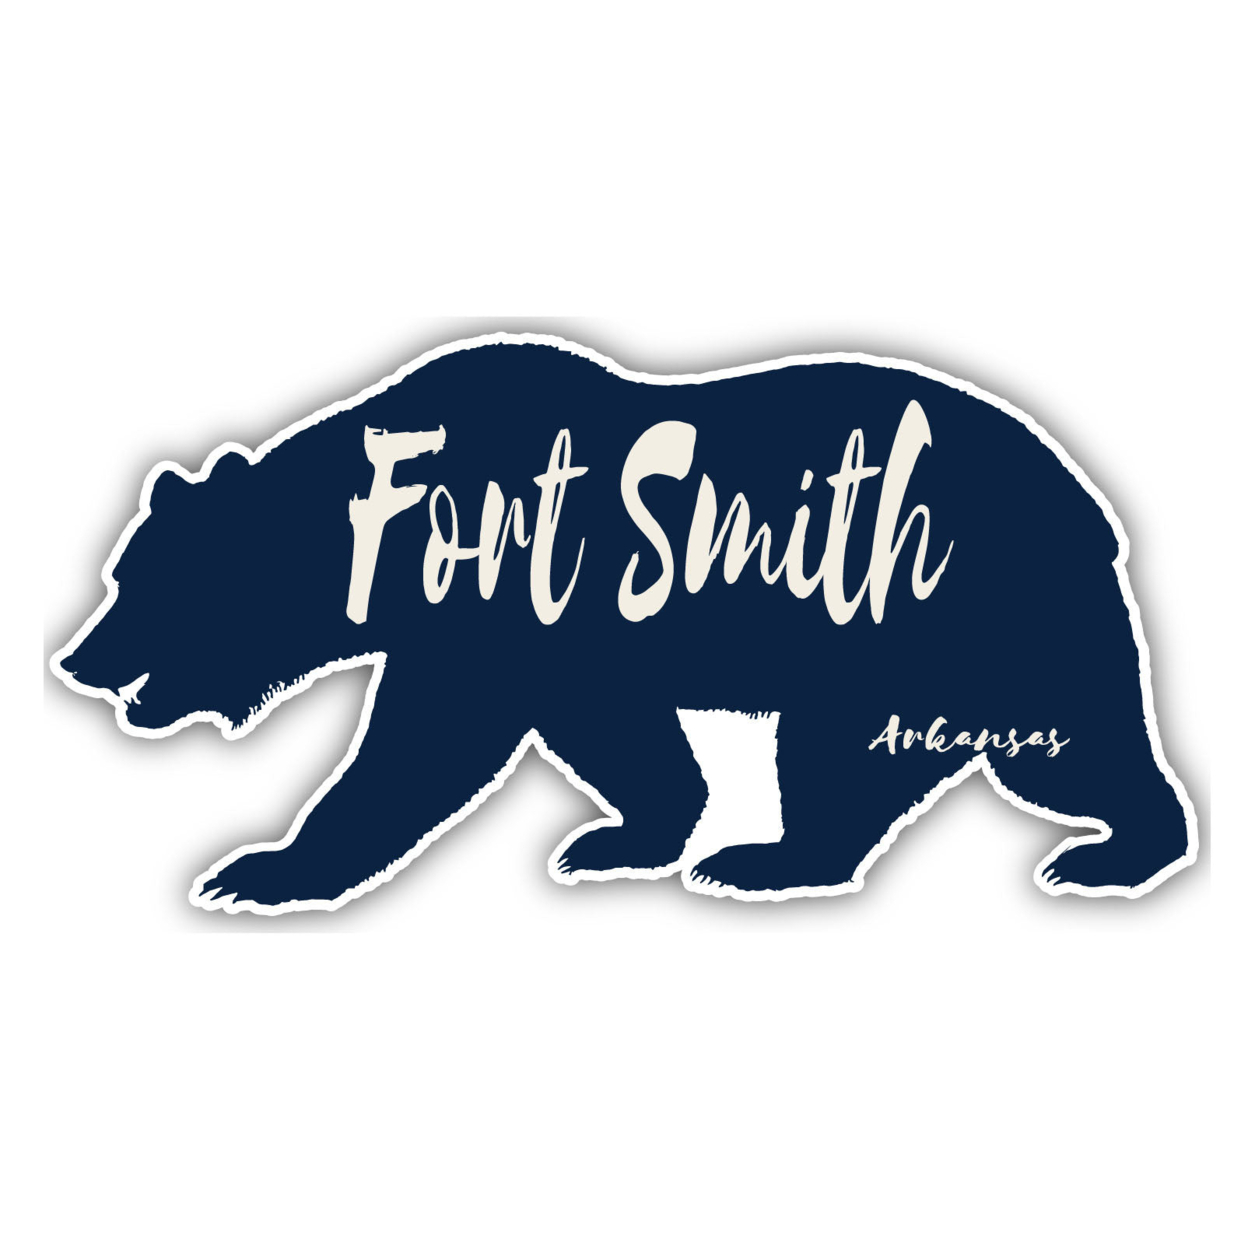 Fort Smith Arkansas Souvenir Decorative Stickers (Choose Theme And Size) - Single Unit, 6-Inch, Bear